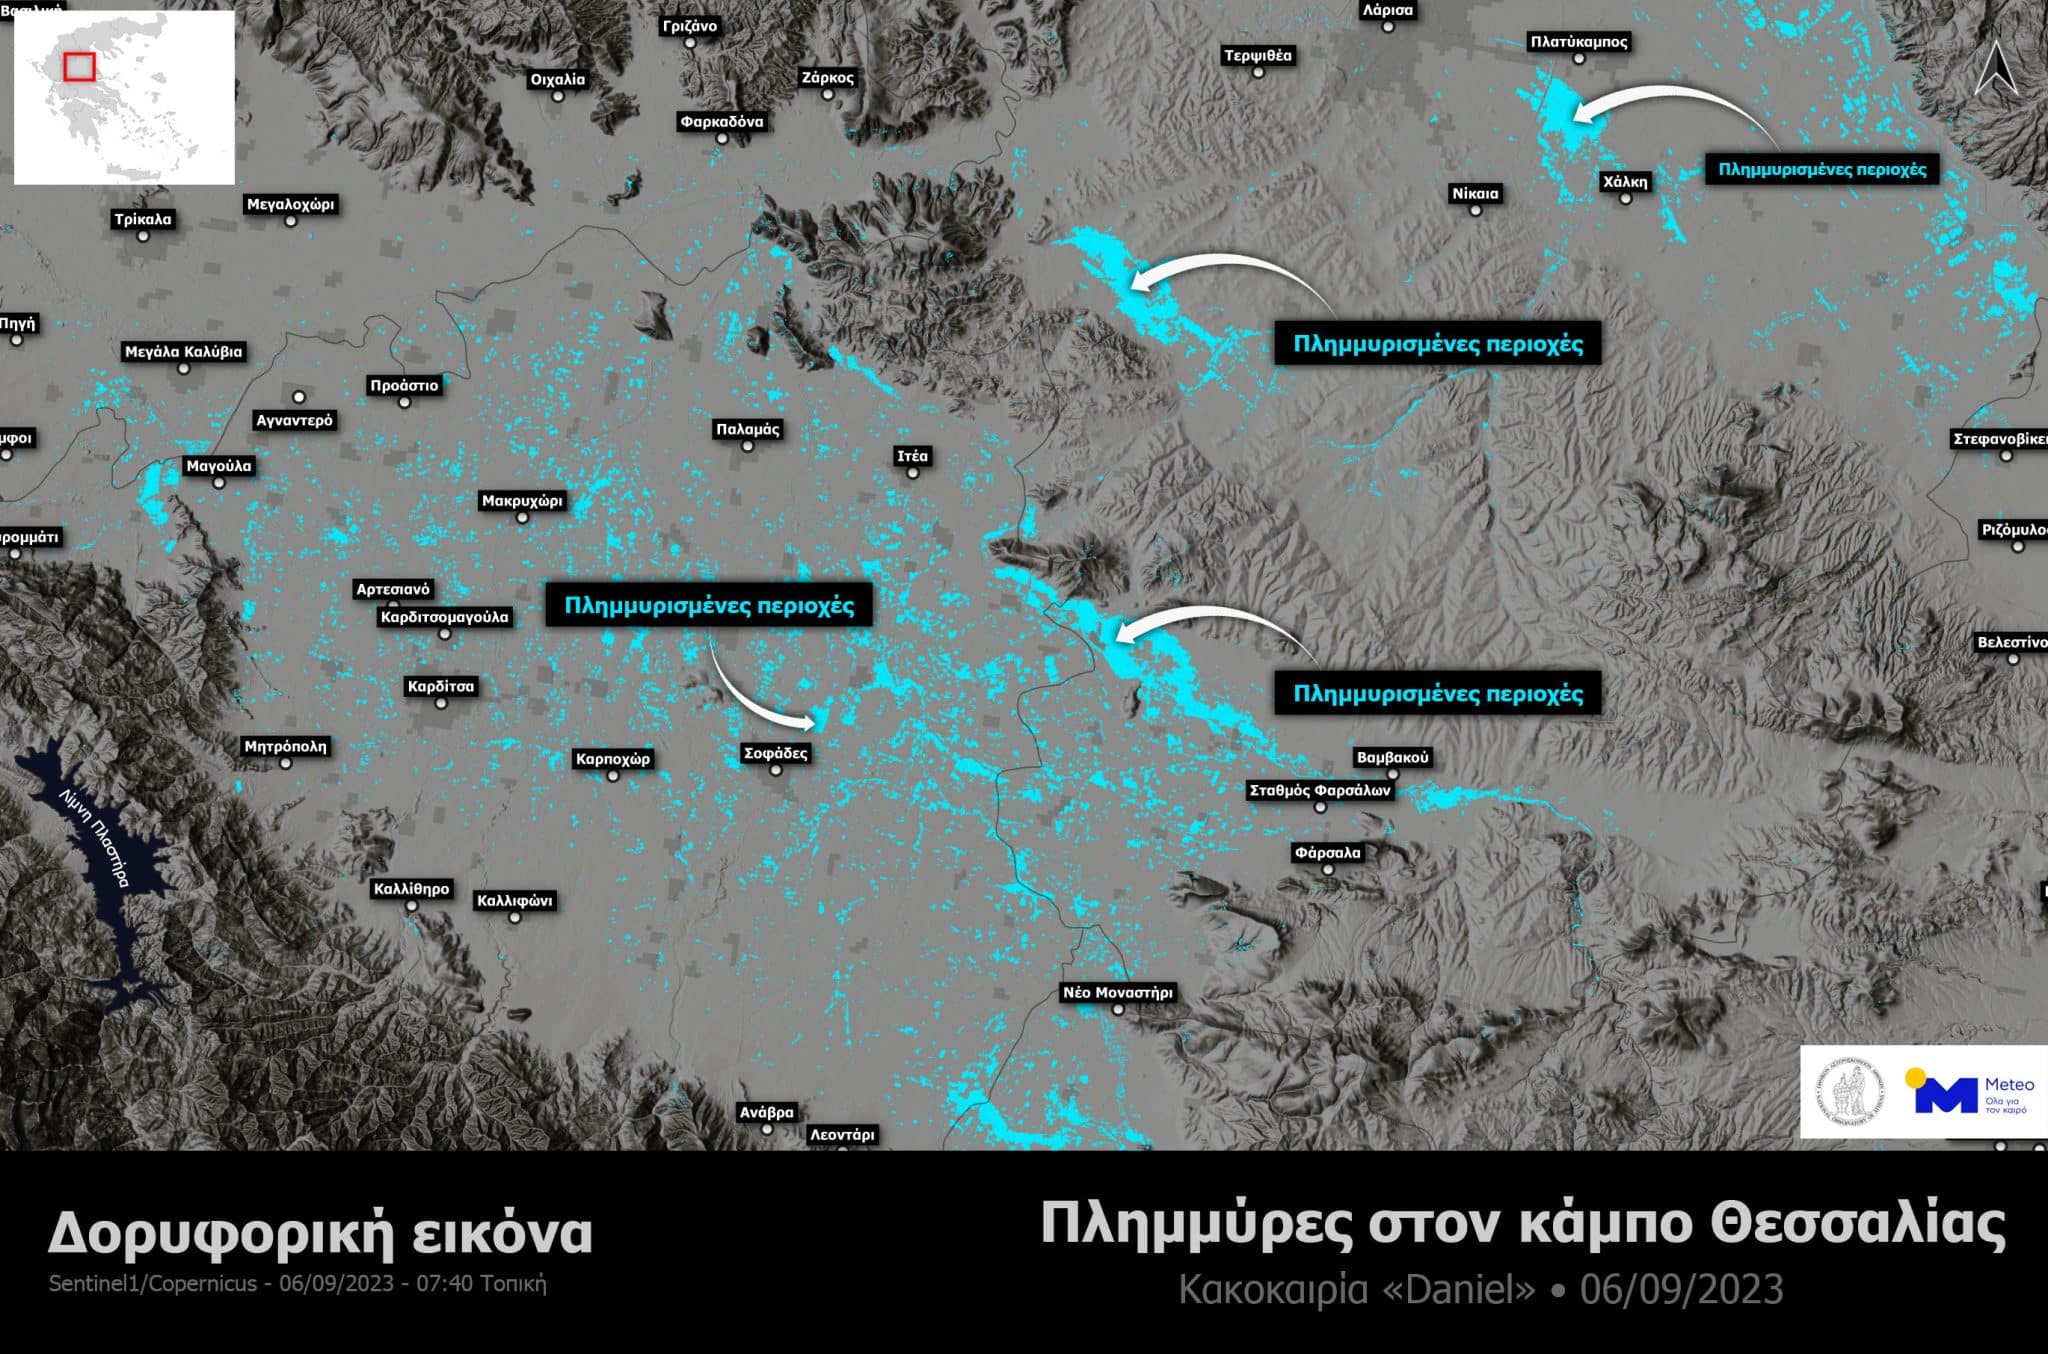 thessalia plumires scaled - Κακοκαιρία «Daniel»: Μήνυμα 112 για εκκένωση χωριών στον Τύρναβο - Έσπασε ανάχωμα του Πηνειού